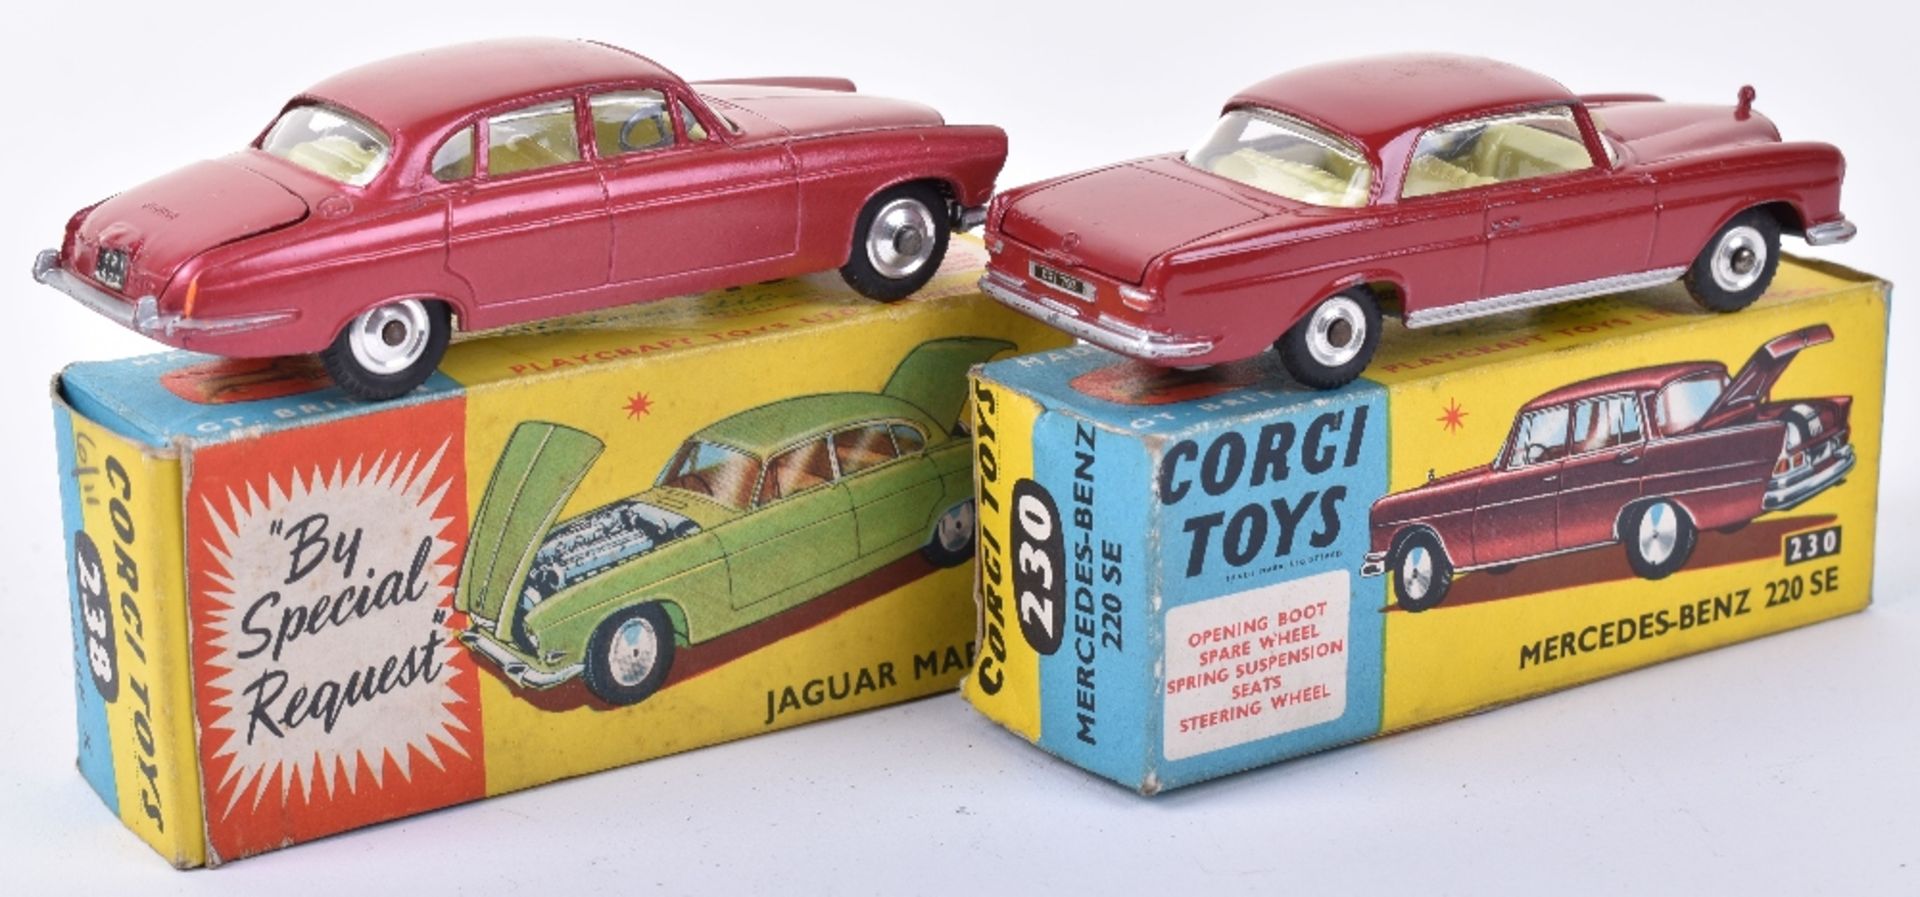 Corgi Toys Boxed 230 Mercedes Benz 220SE - Image 2 of 2